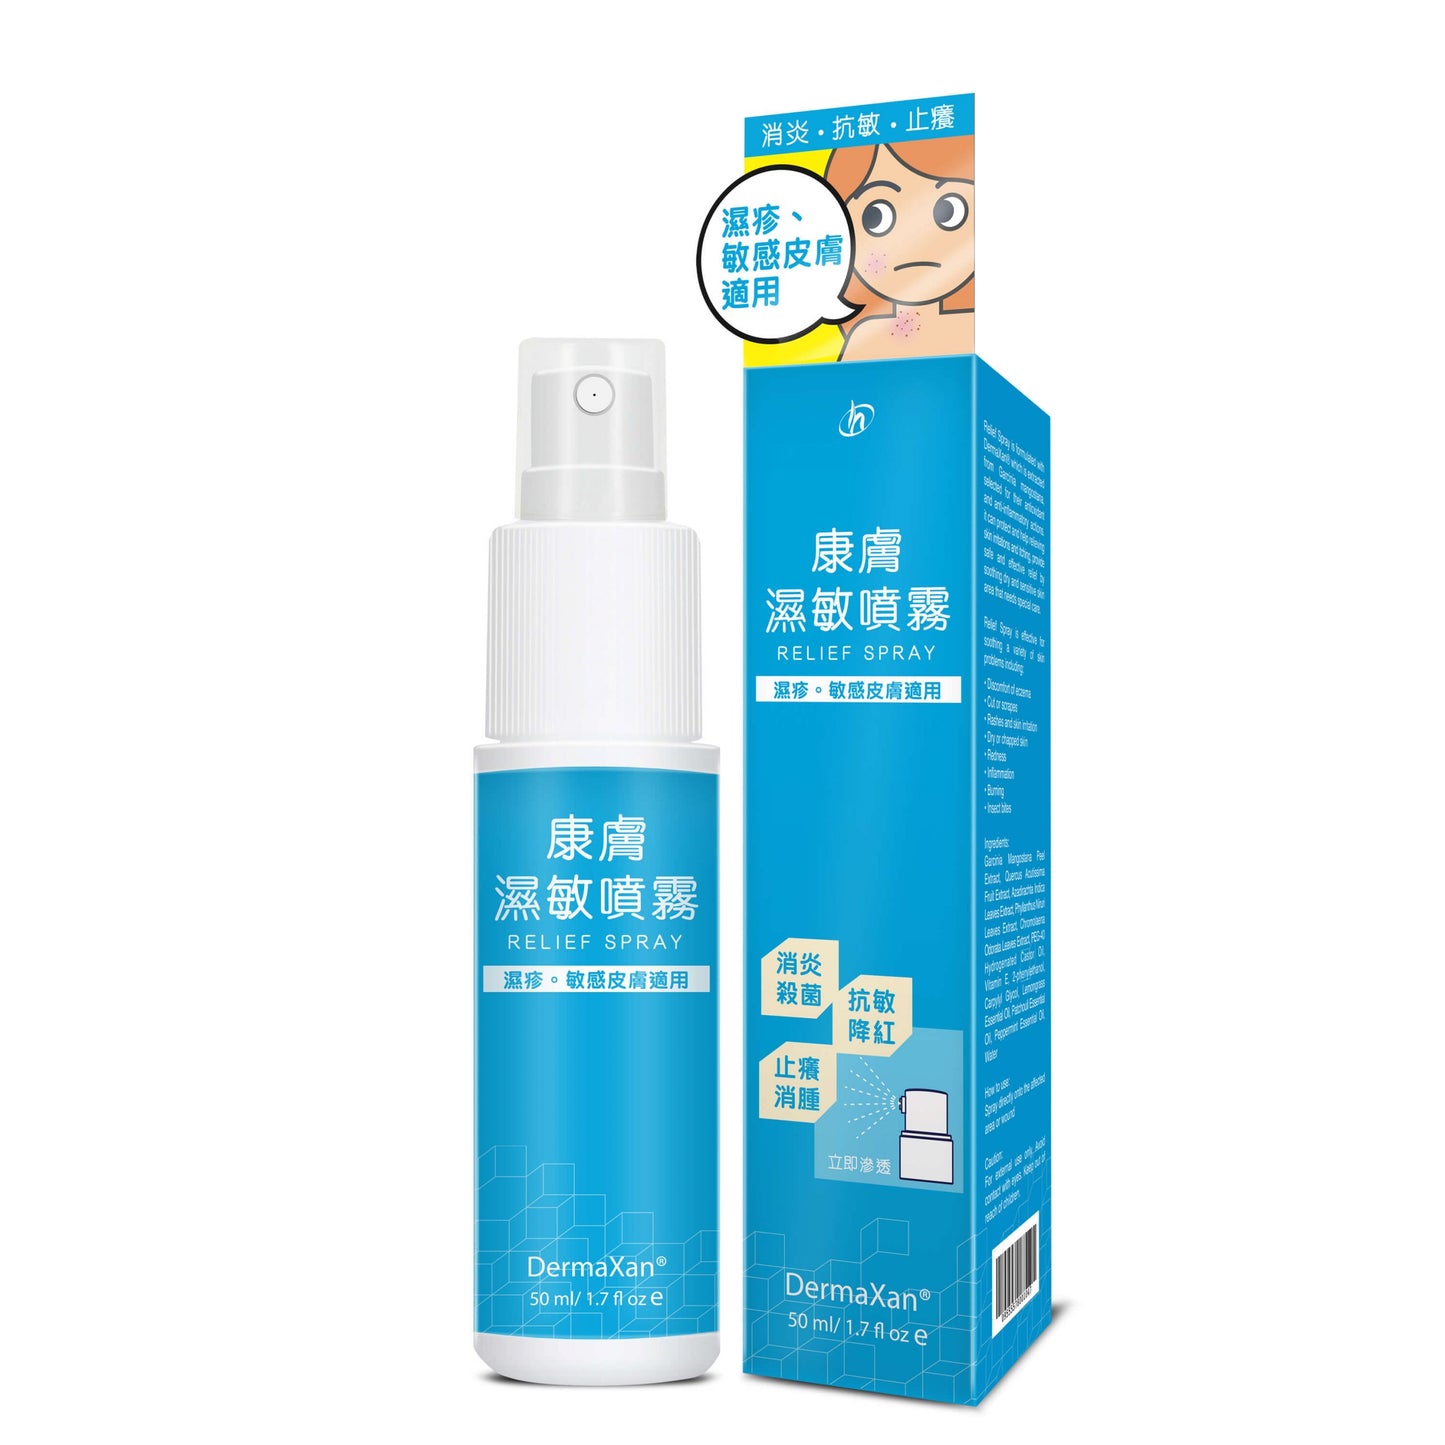 Moisture Sensitivity Duo Set - HHP Relief Spray and Lalisse Medi-Pro Vitalizing Skin Cream